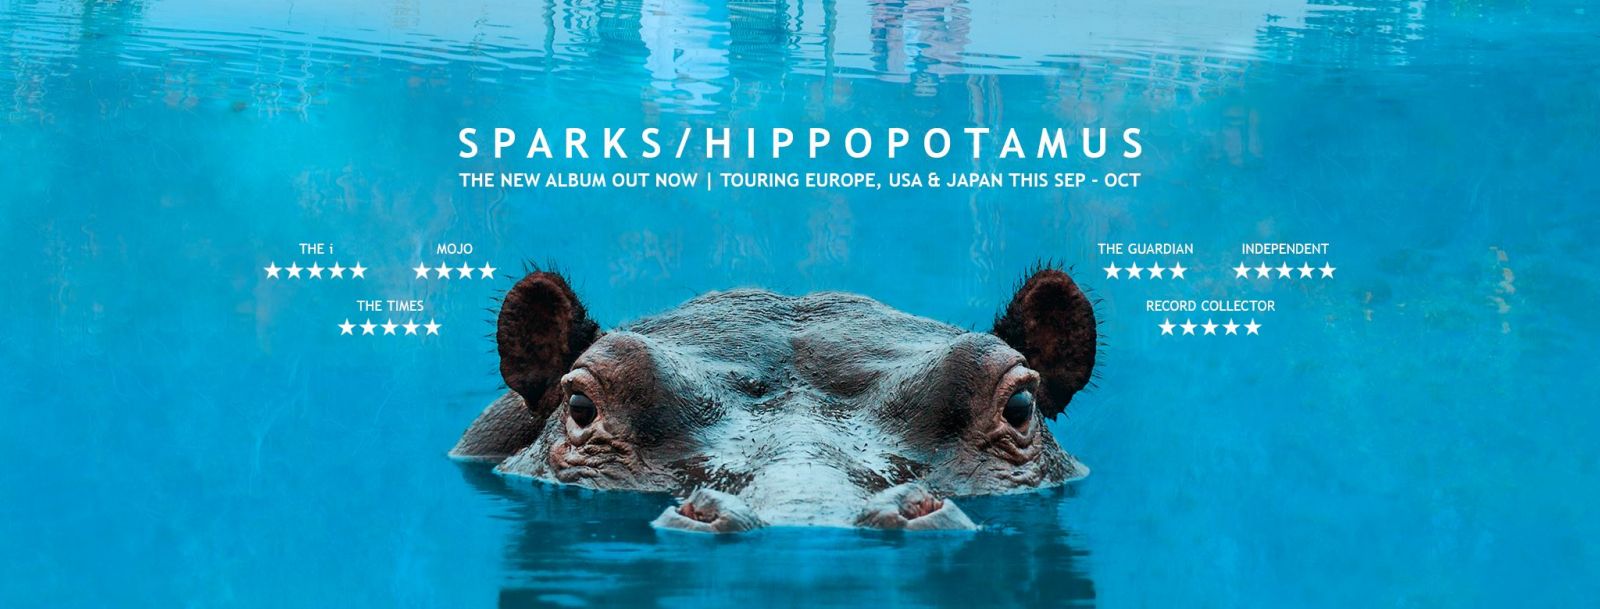 Sparks Hippopotamus album available now